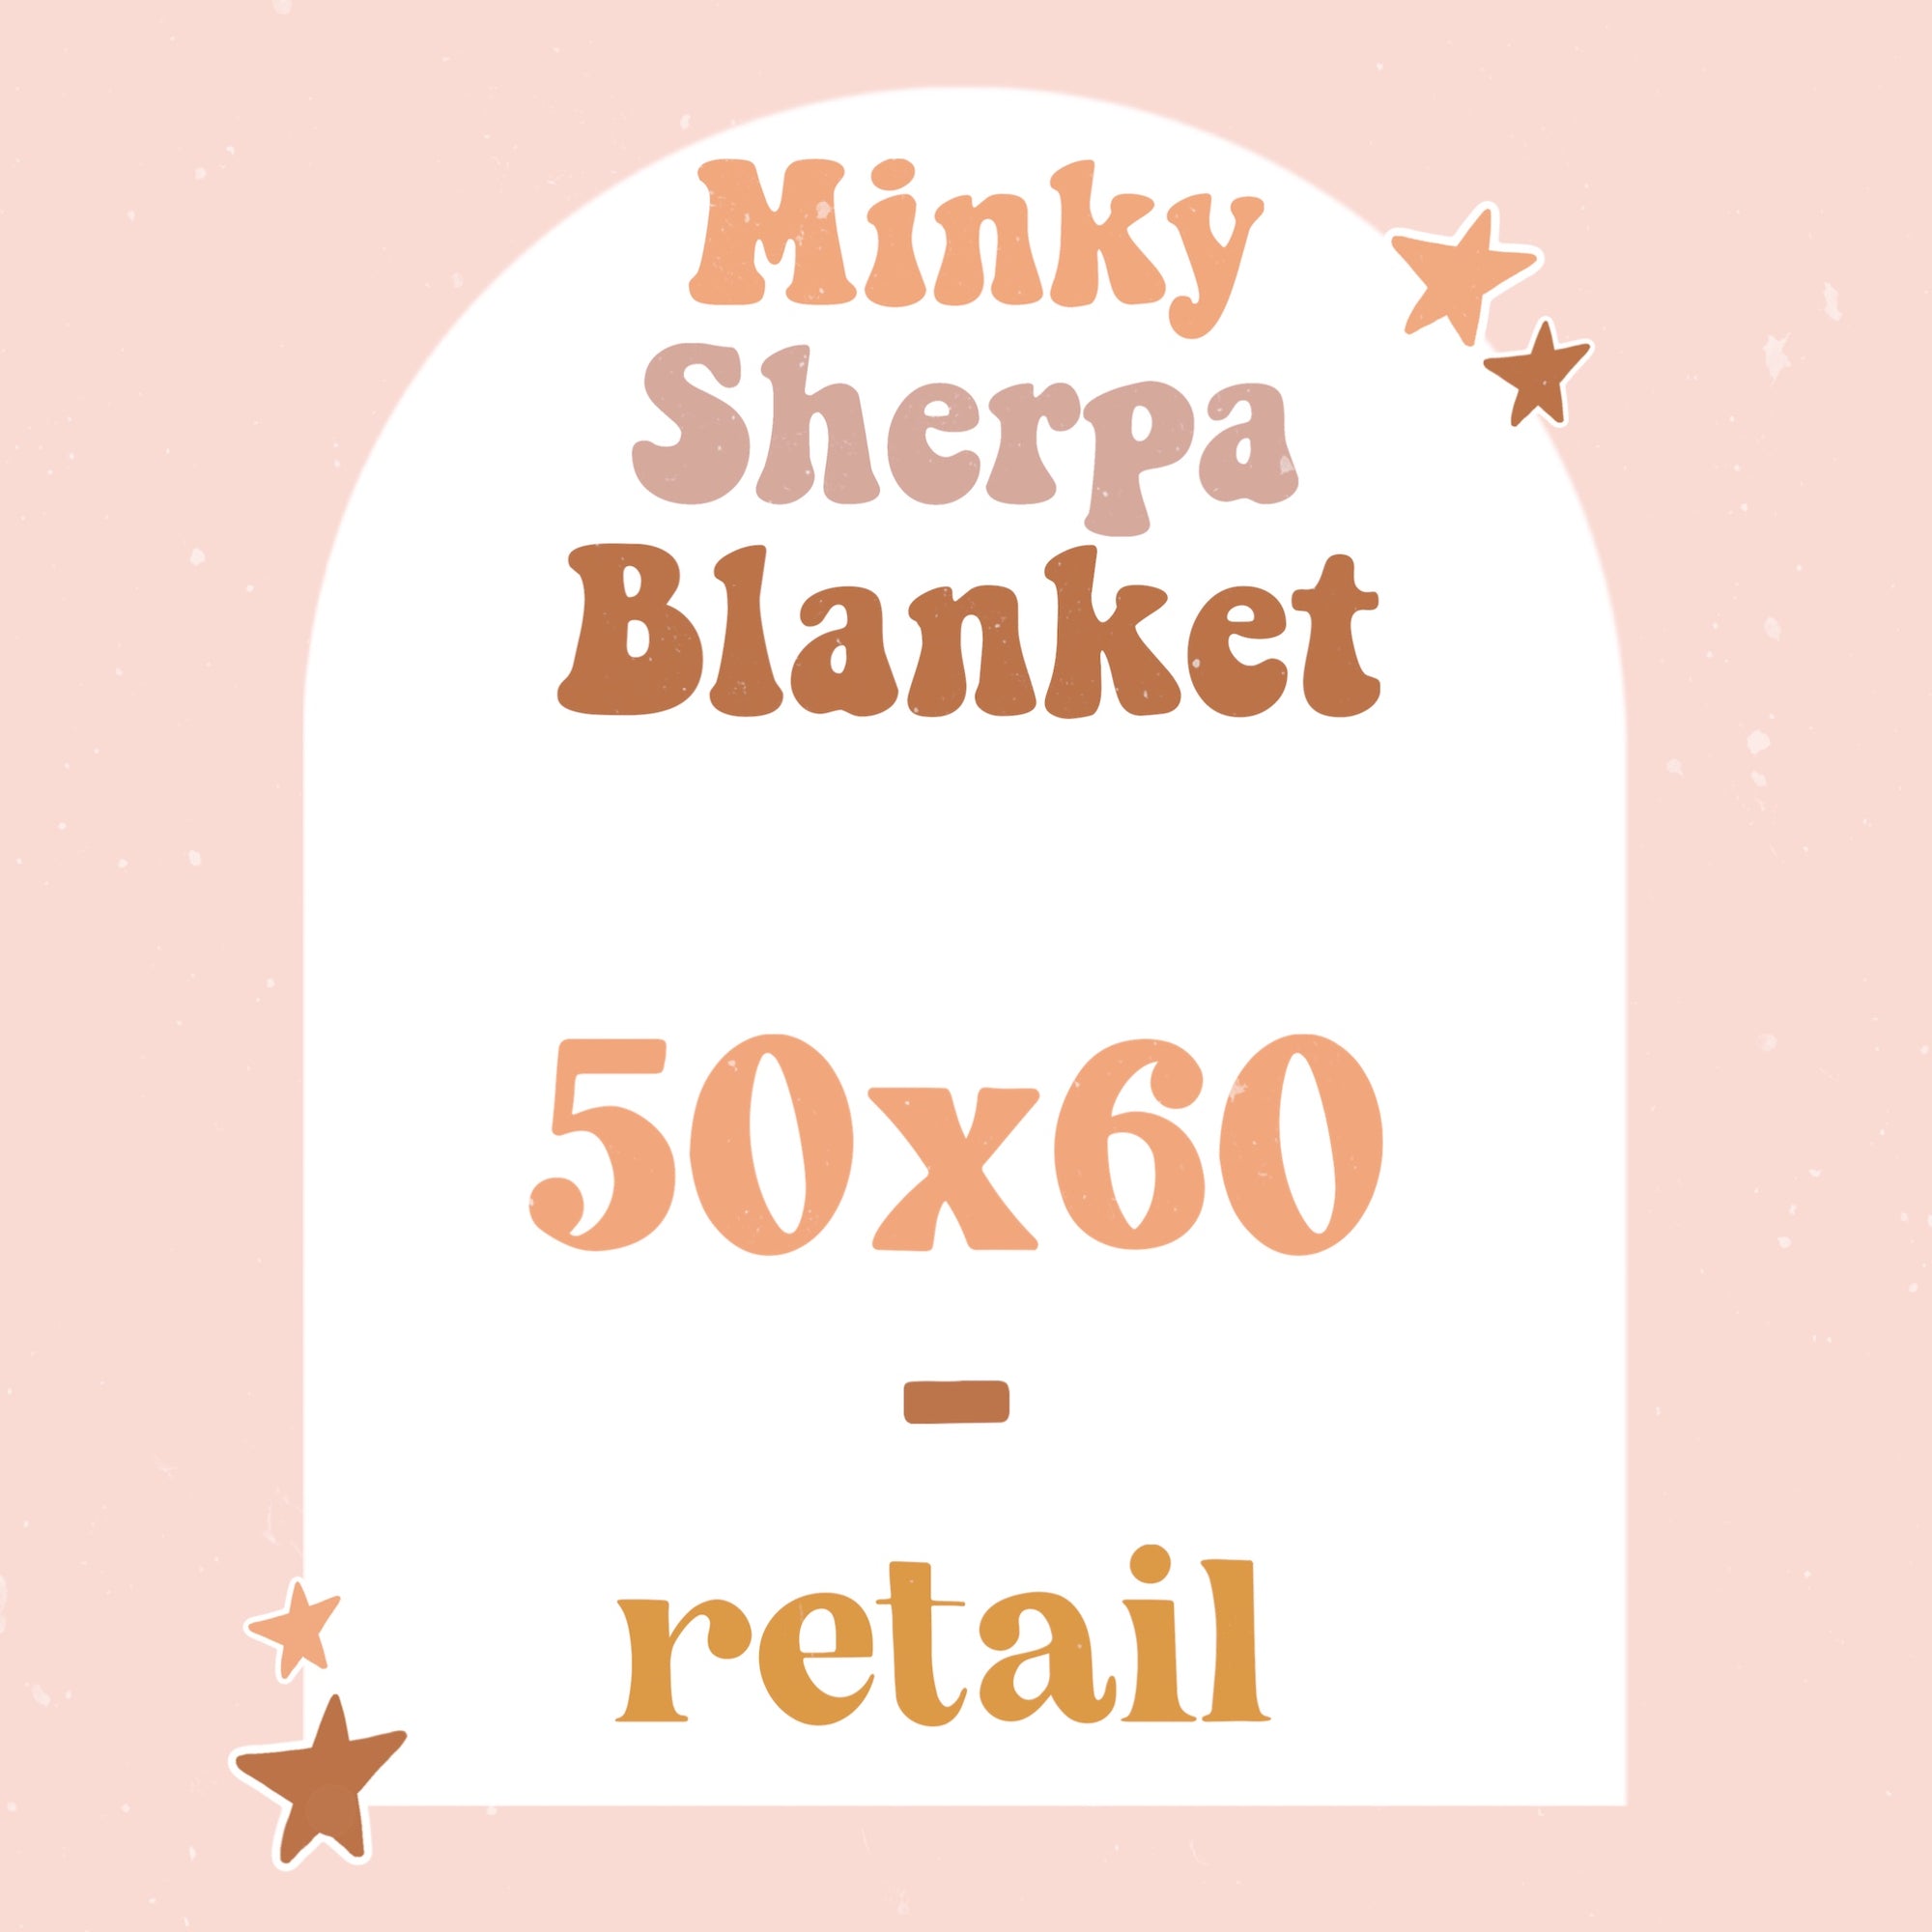 Minky Sherpa Blanket 50x60 RETAIL